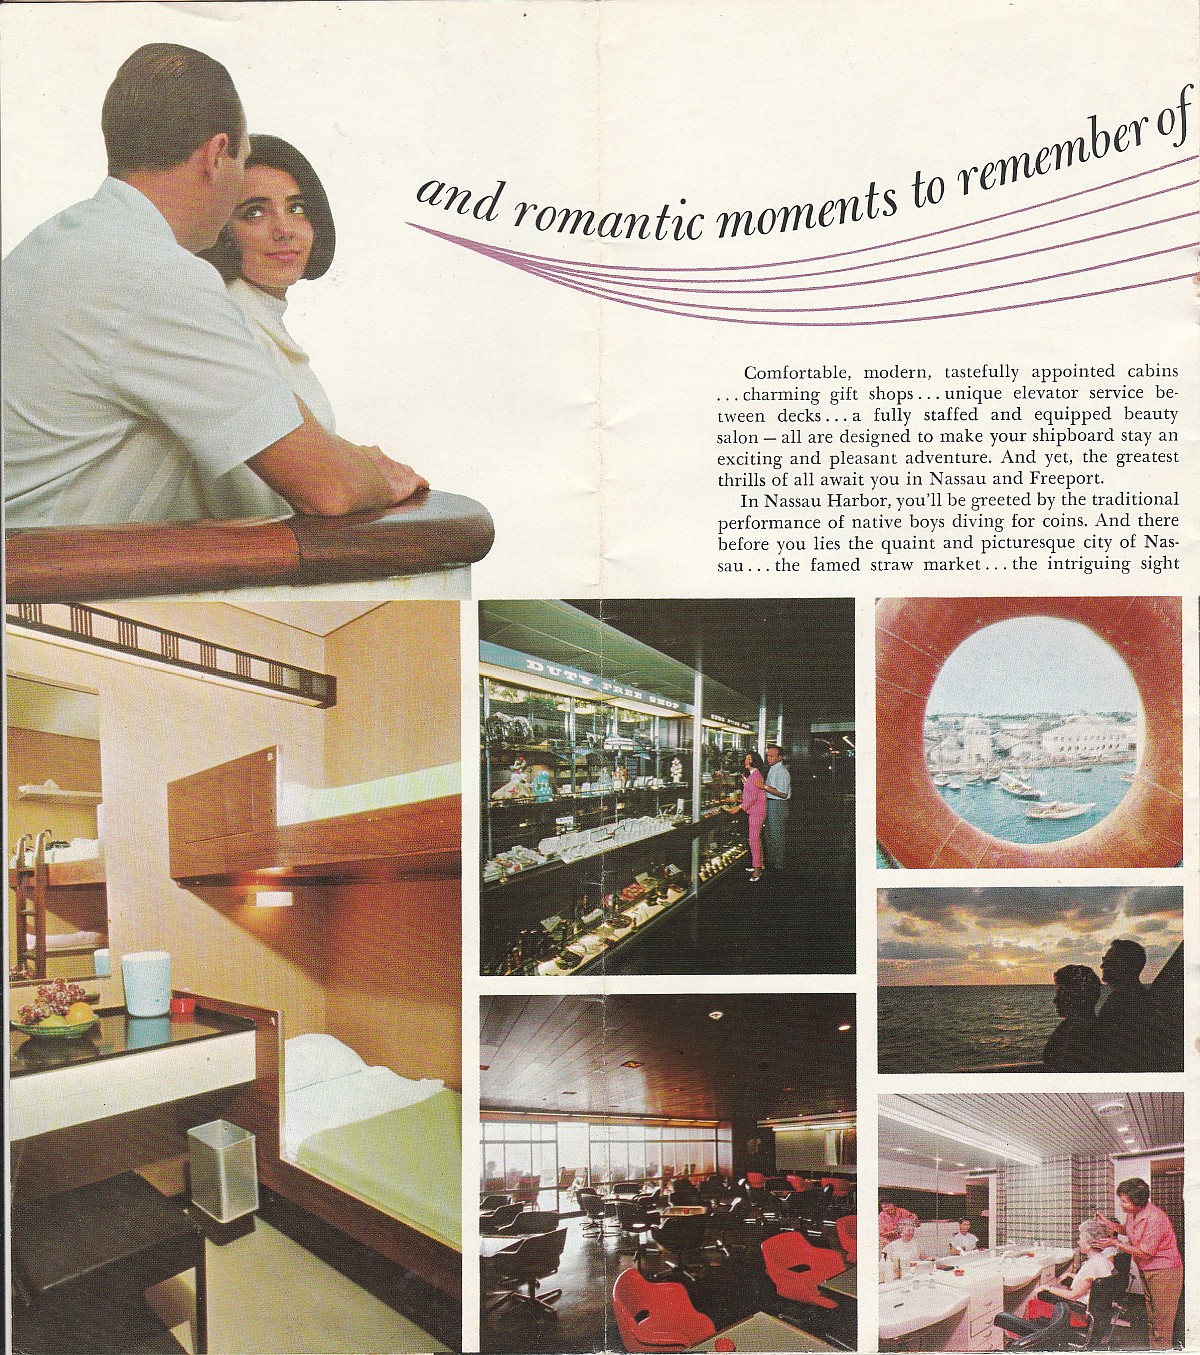 mv Nili Cabin, shops, lido lounge pics: Romantic moments to remember